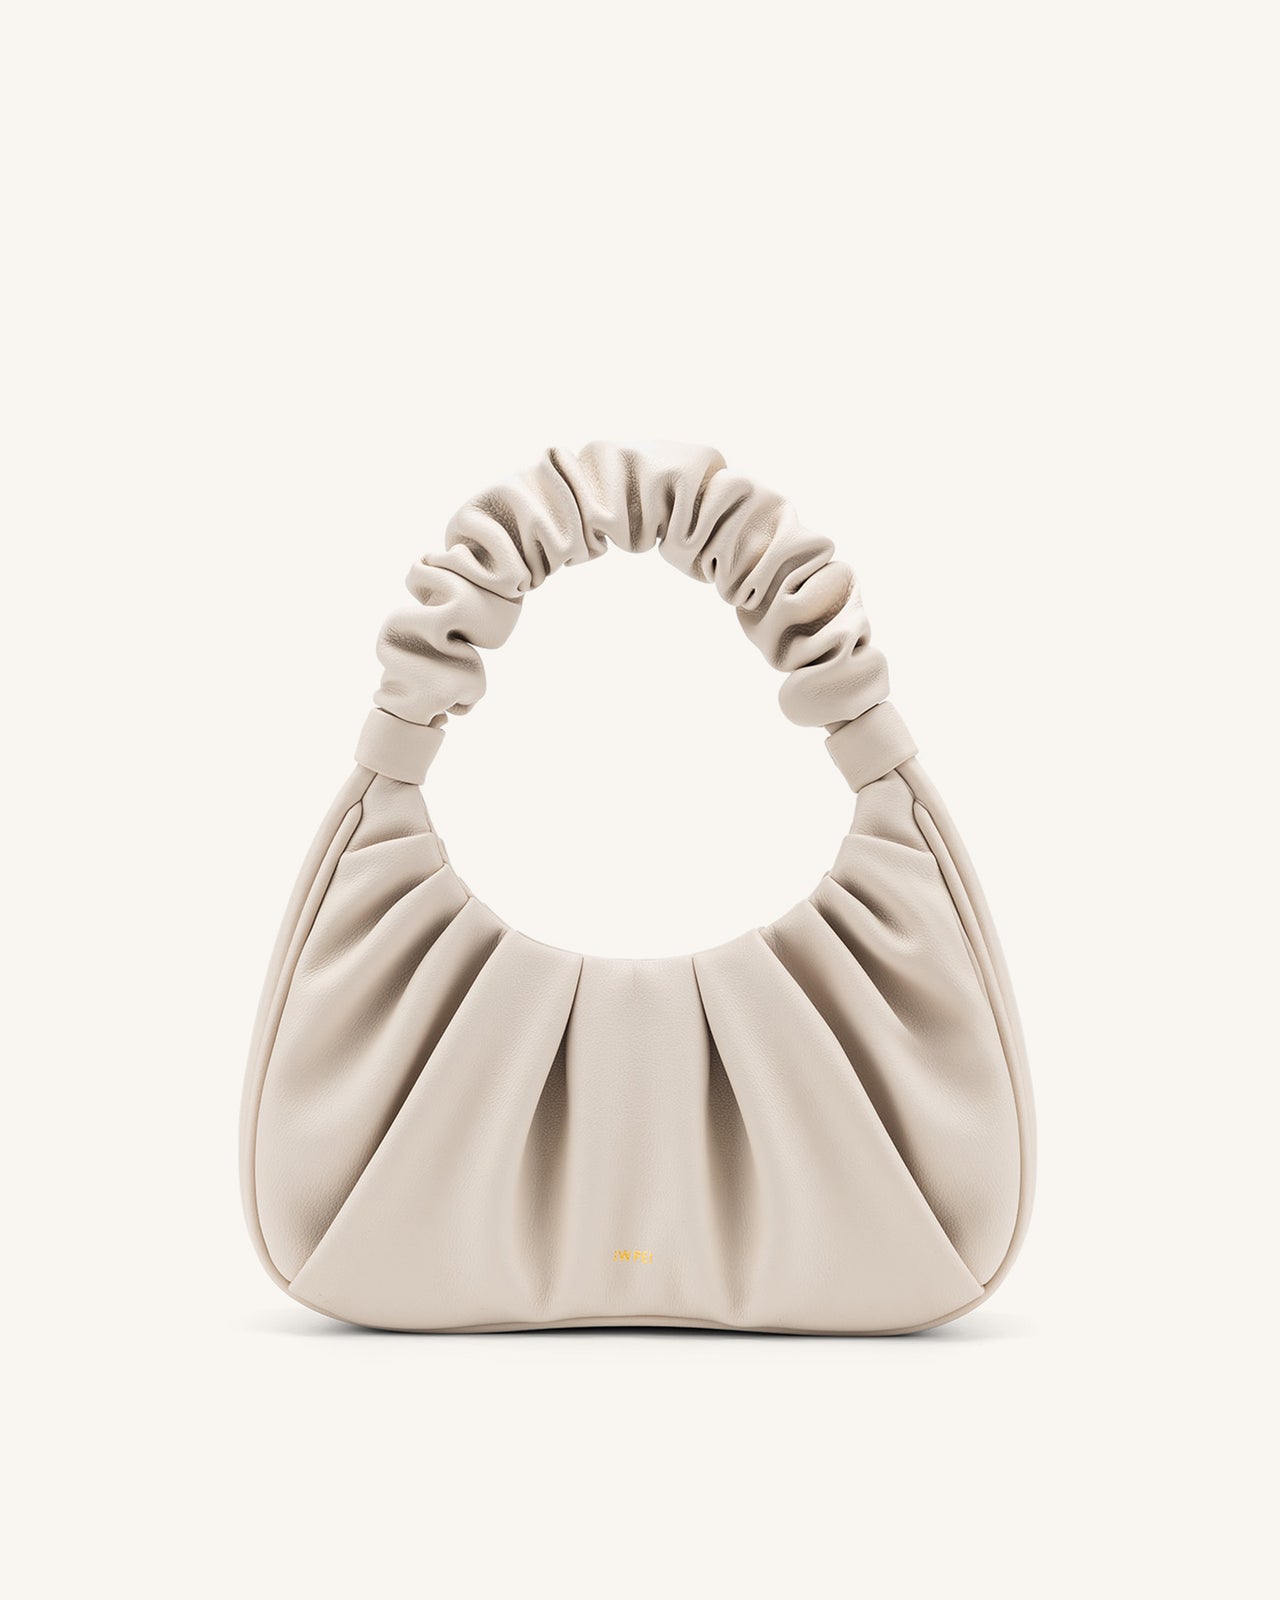 JW PEI MAZE BAG Casual Style Street Style Plain Logo Shoulder Bags